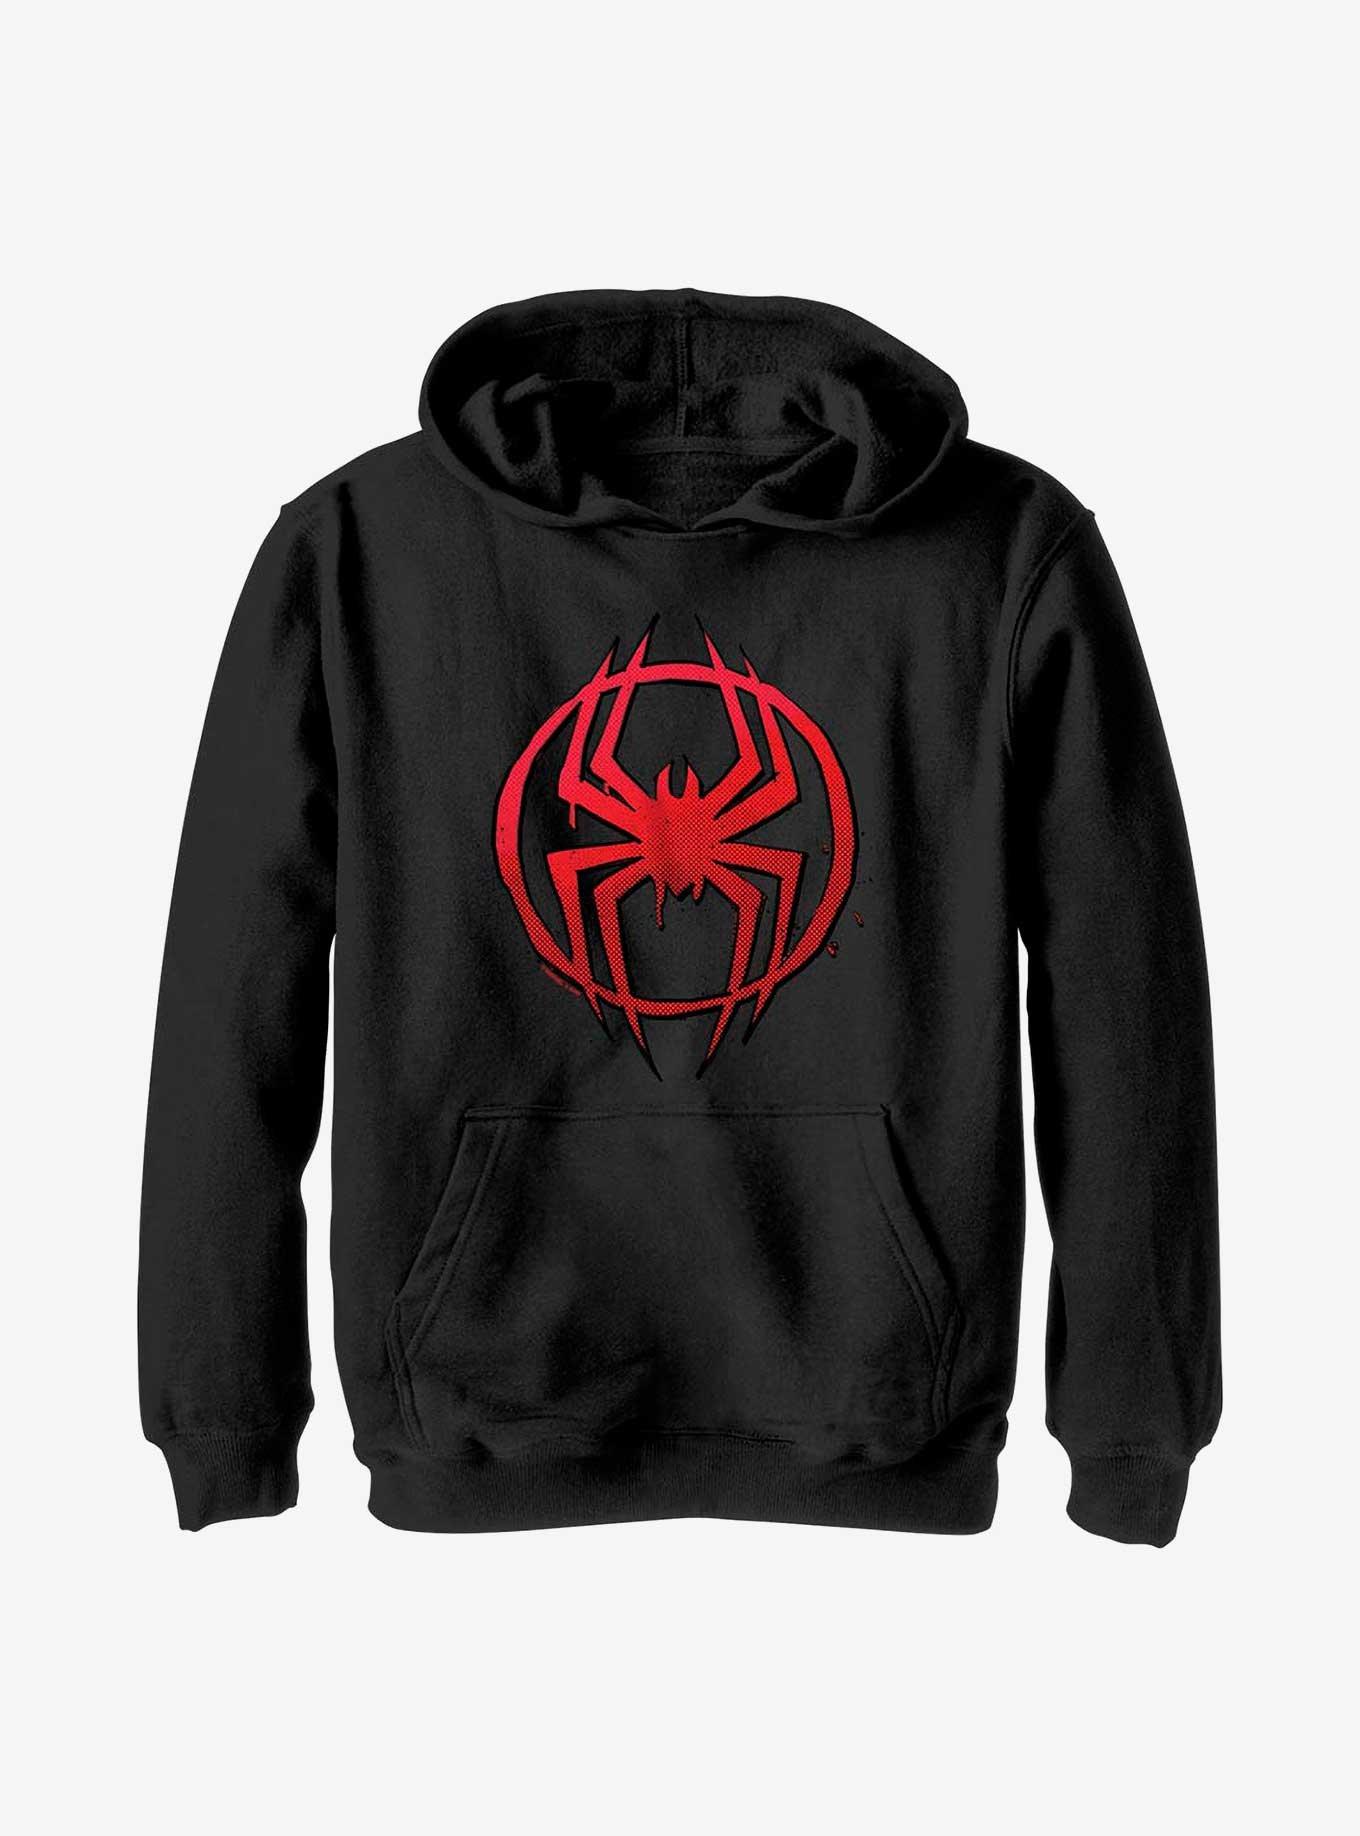 Clothes Sweatshirt Accessory, Spiderman Custom Sweatshirt